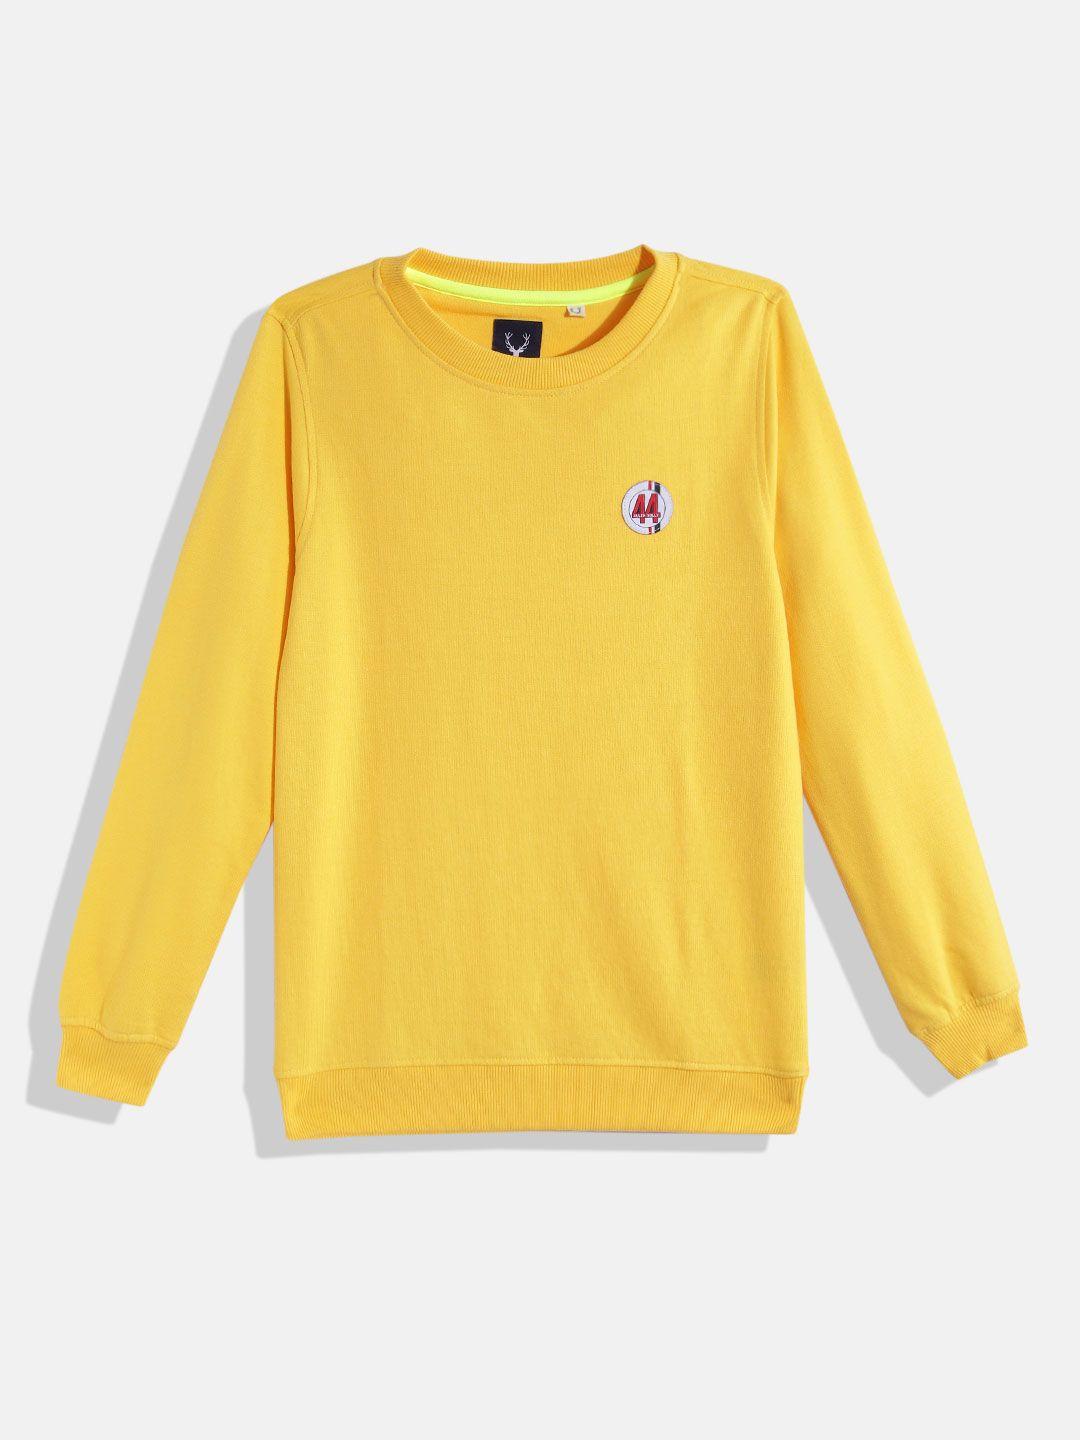 allen solly junior boys yellow solid sweatshirt